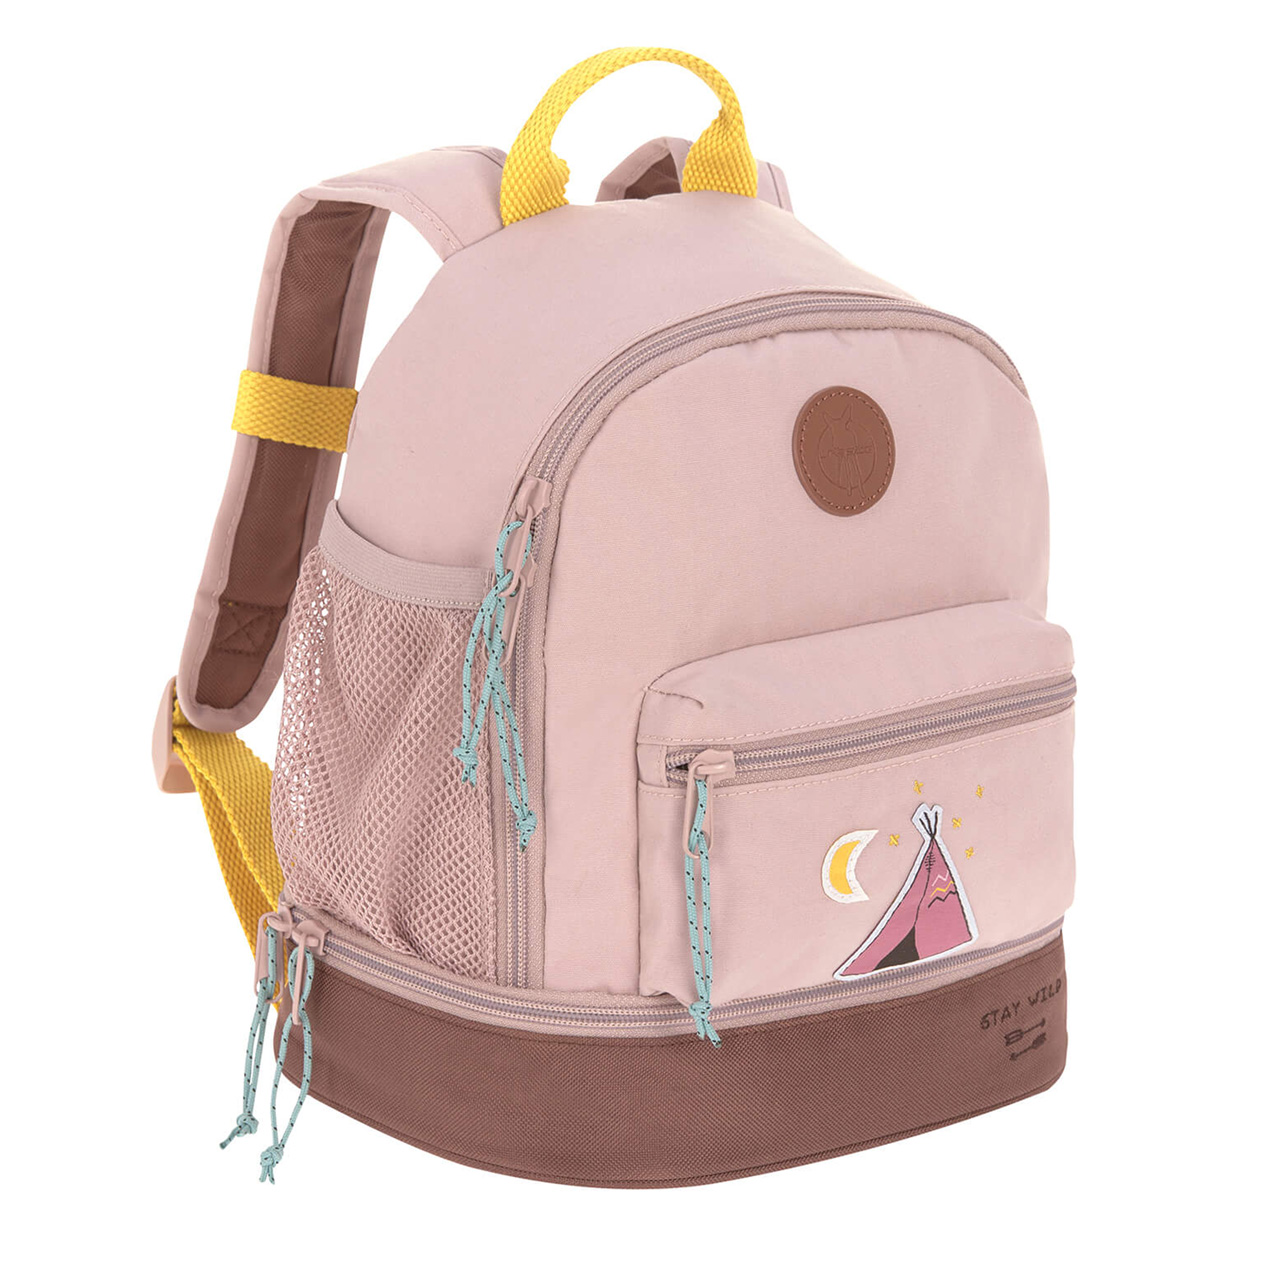 Laessig-Kindergartenrucksack-Adventure-Tipi-rosa-Kinder-rucksack-online-kaufen-1203001749-lafueliki